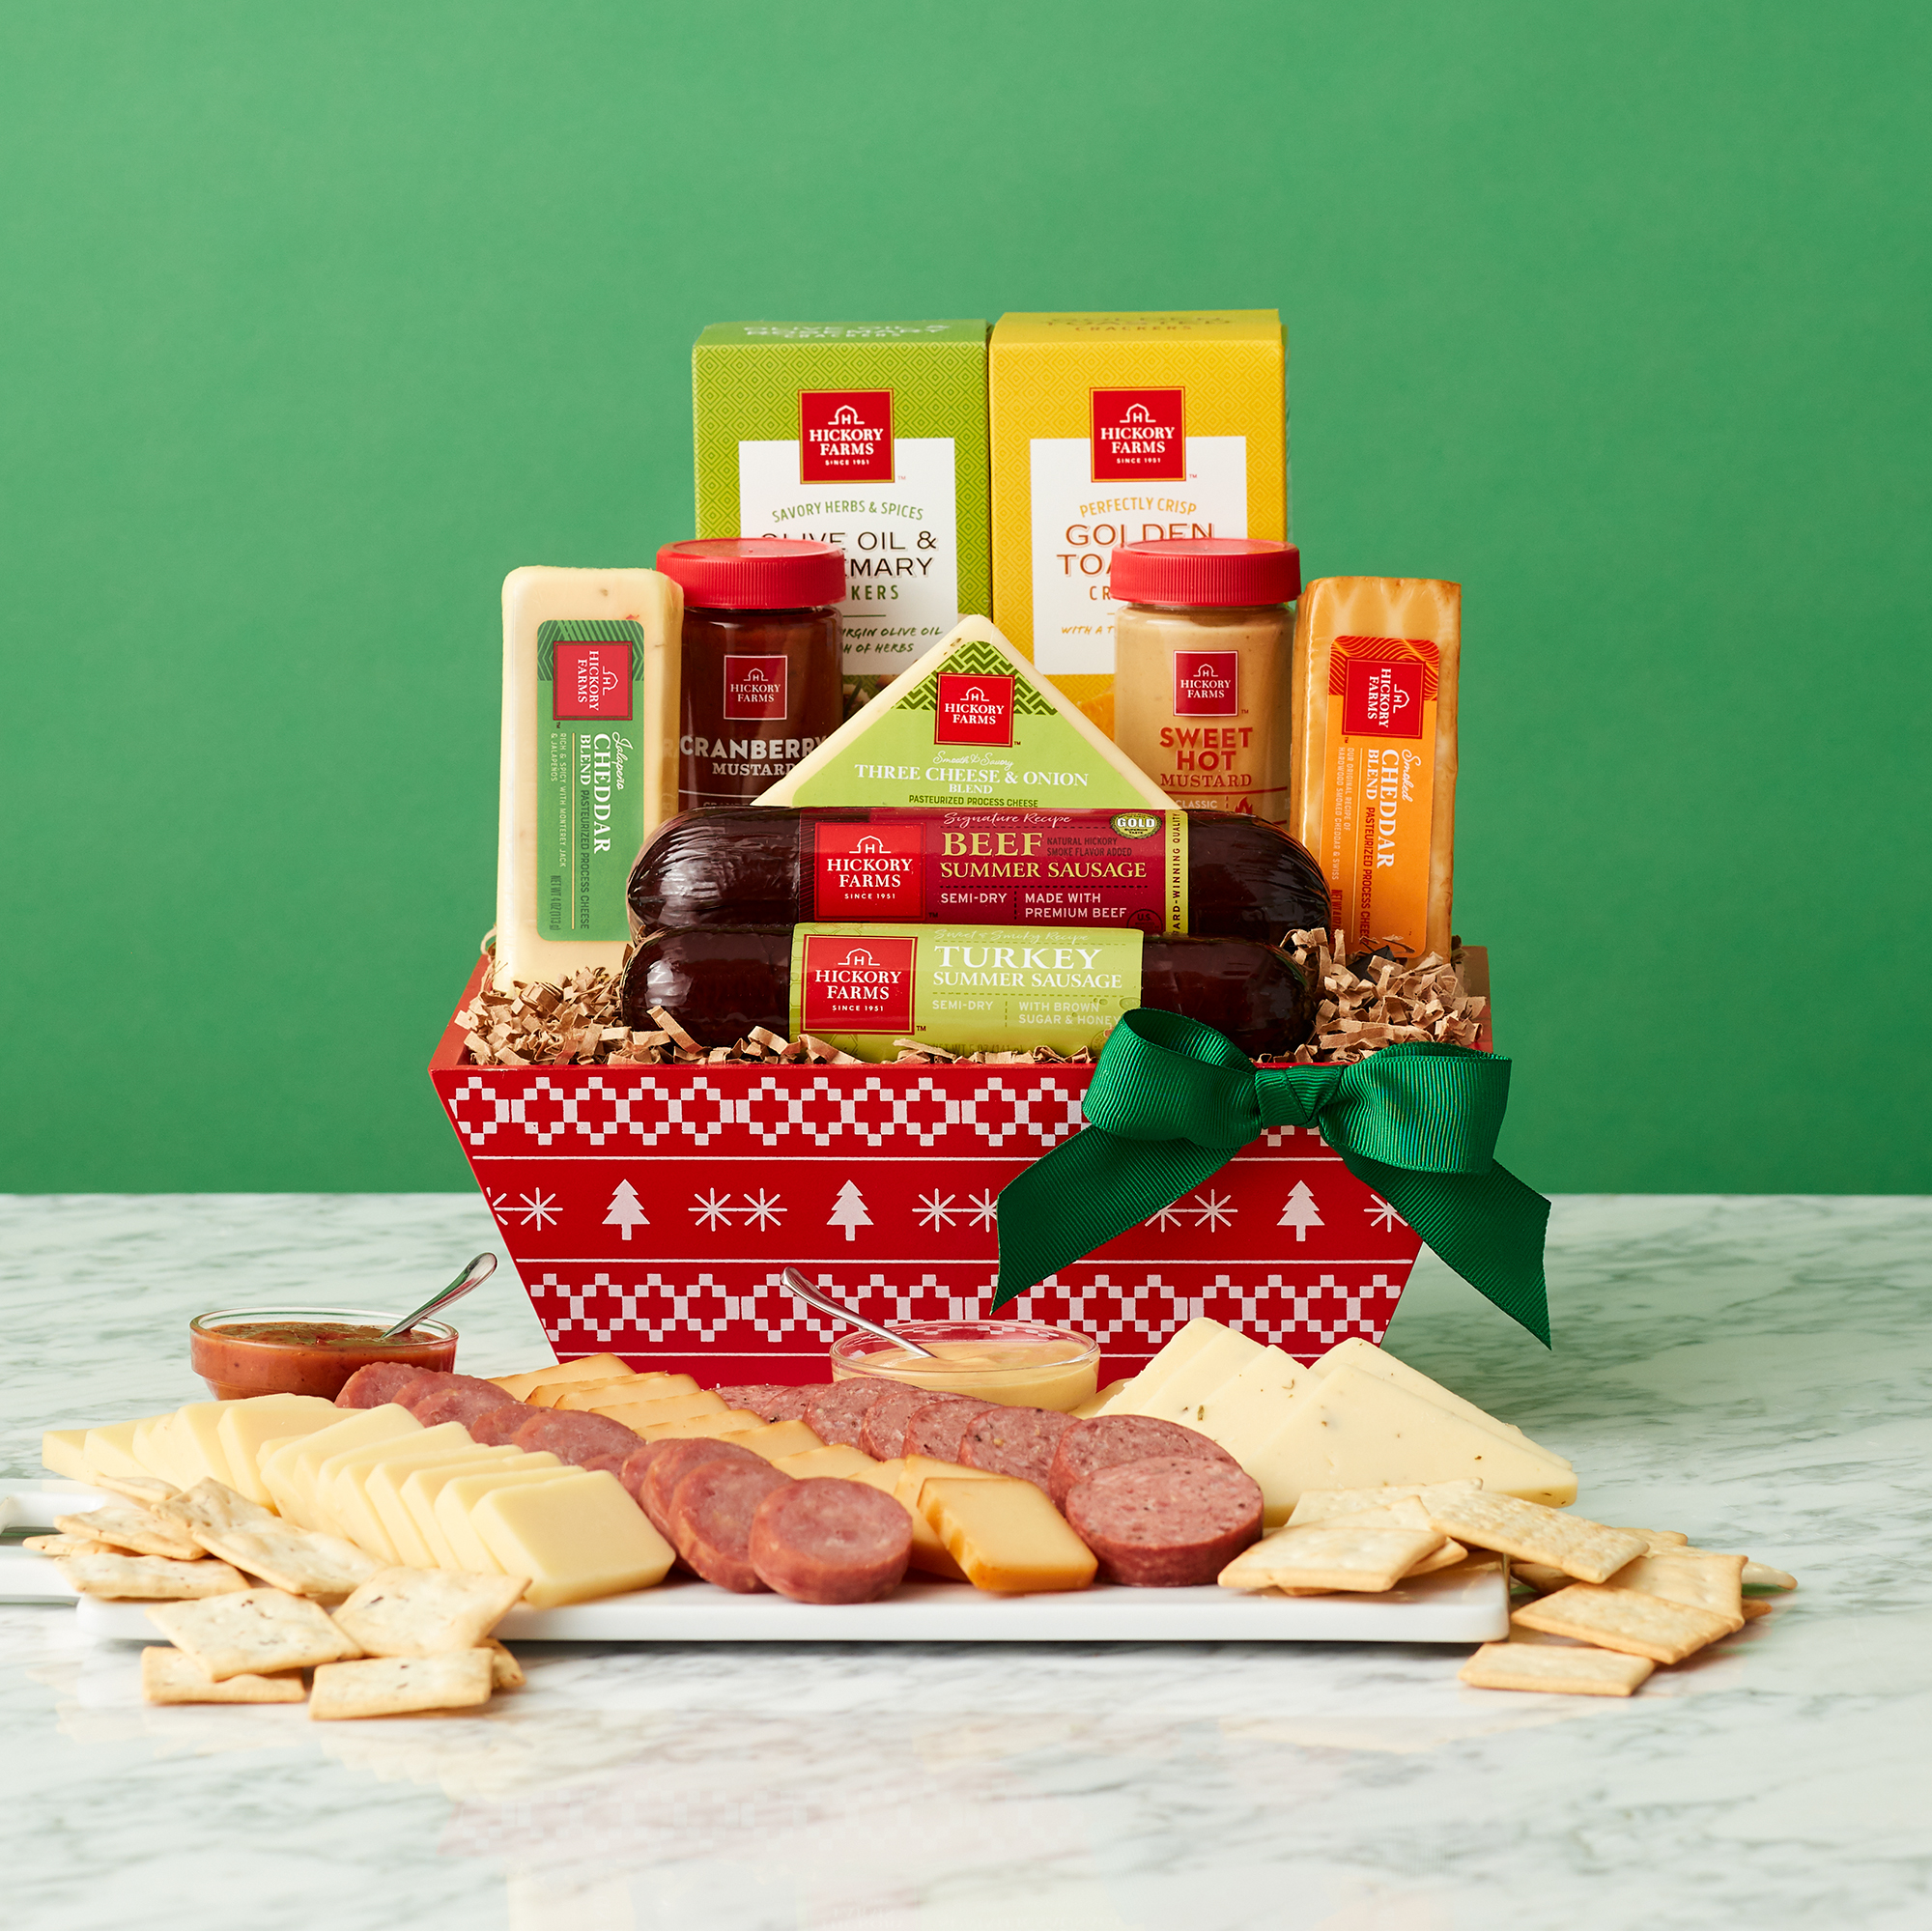 Hot Stuff Summer Sausage & Cheese Gift Box - 54.99 USD | Hickory Farms